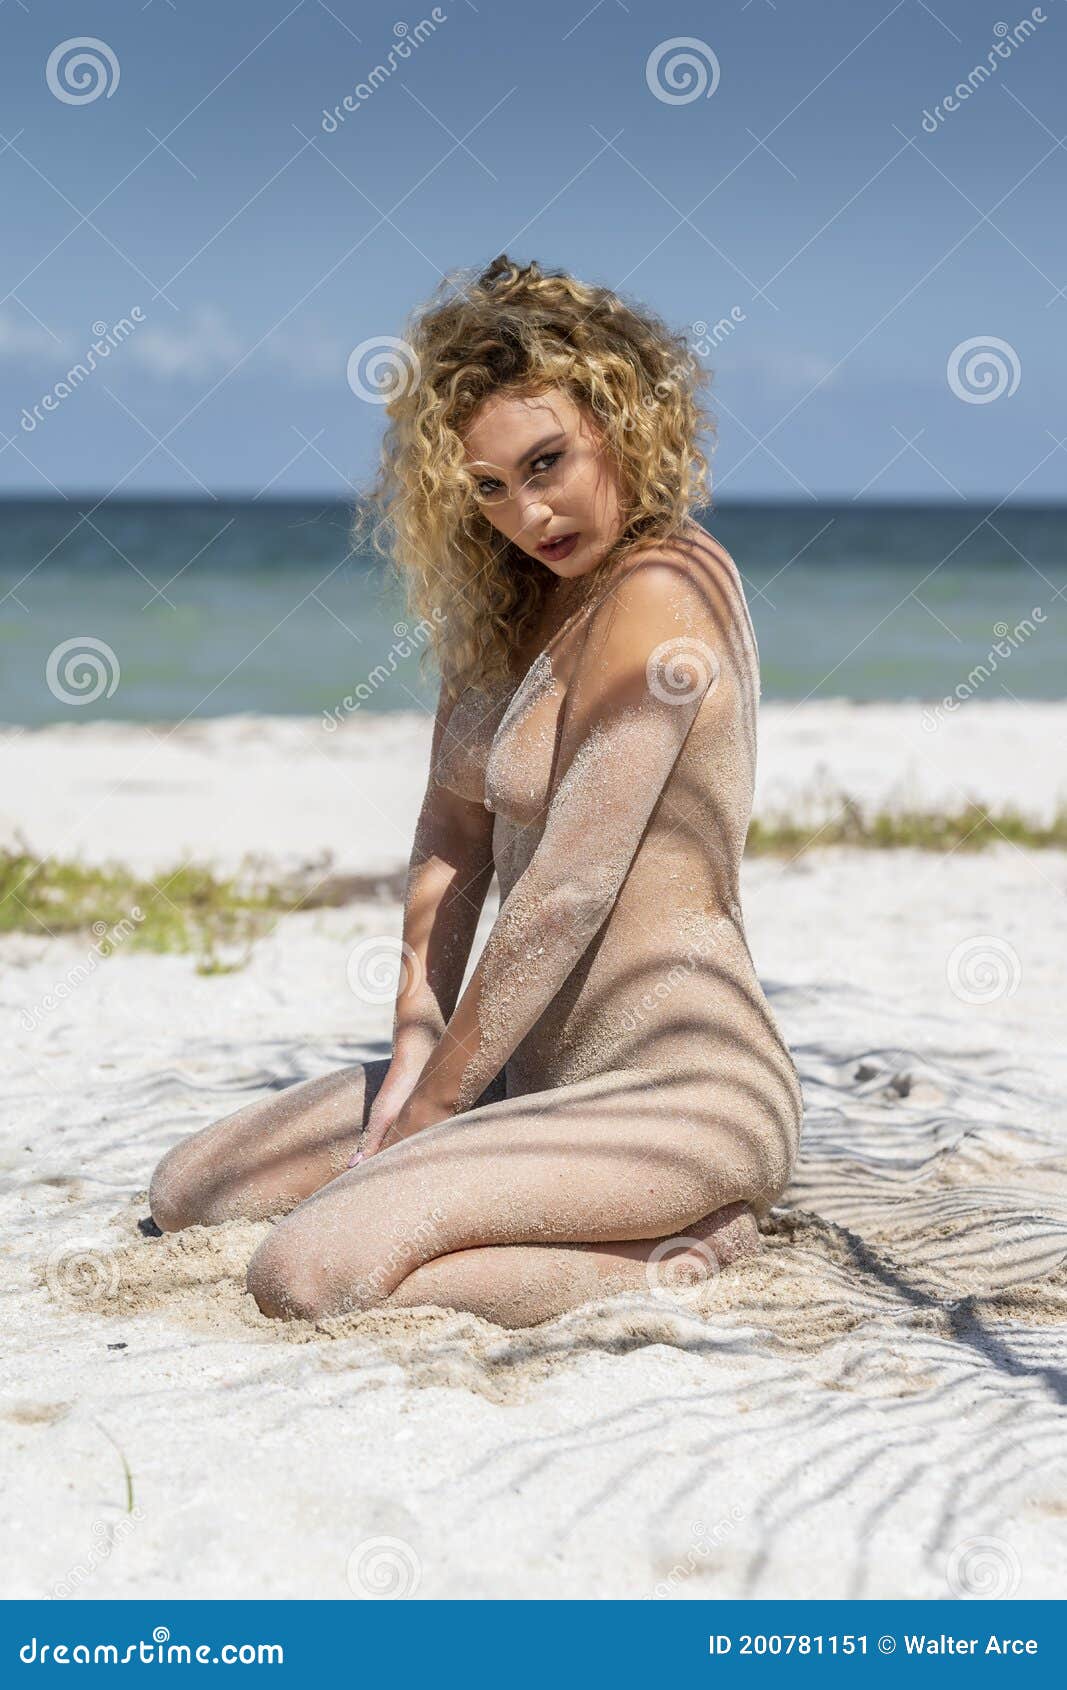 On beach nudes the List of